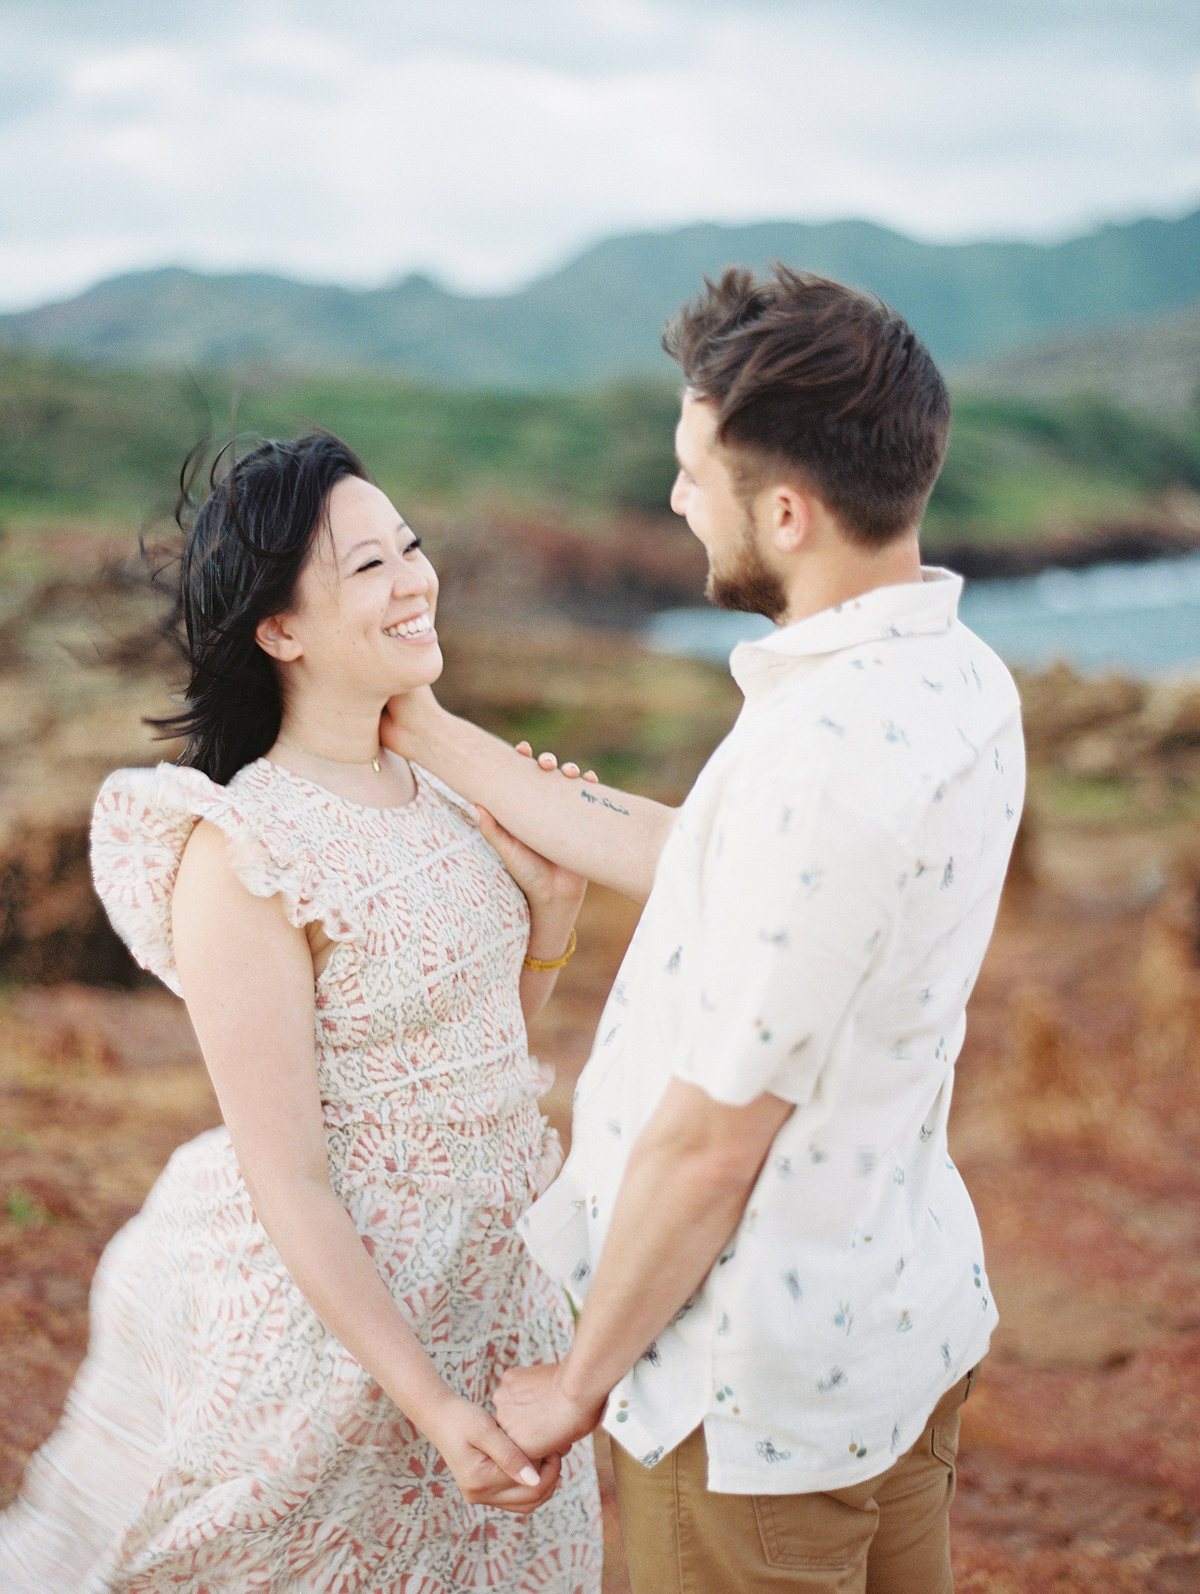 Kauai couples photographer